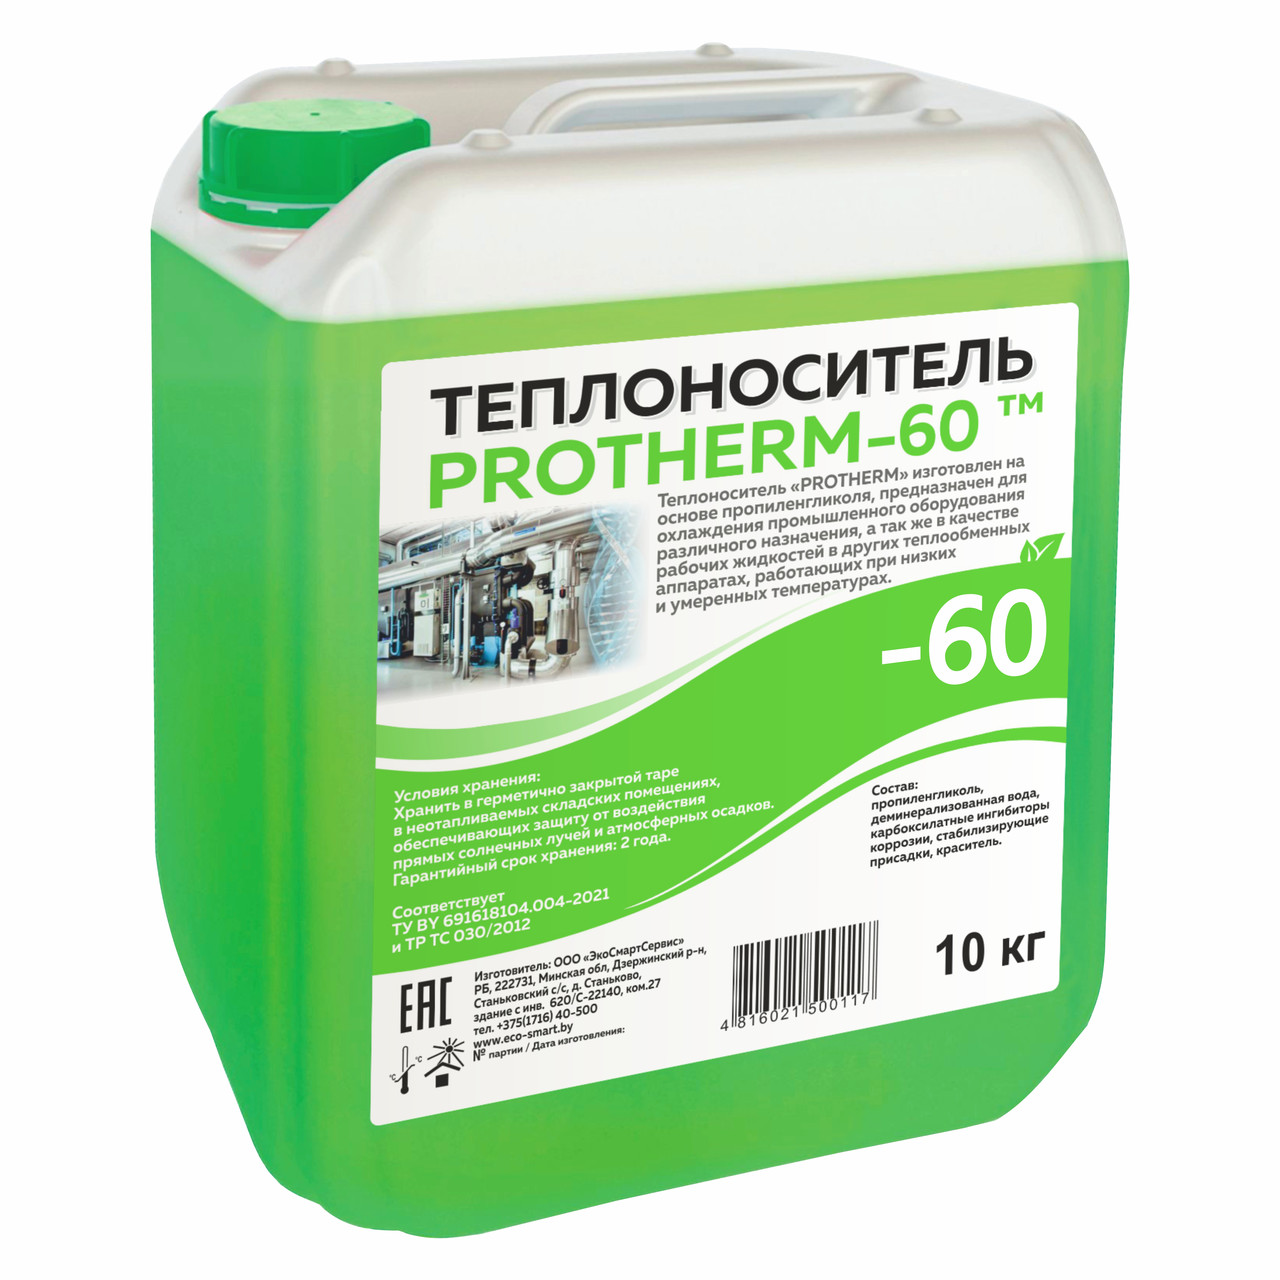 Теплоноситель Protherm-60, 10 кг